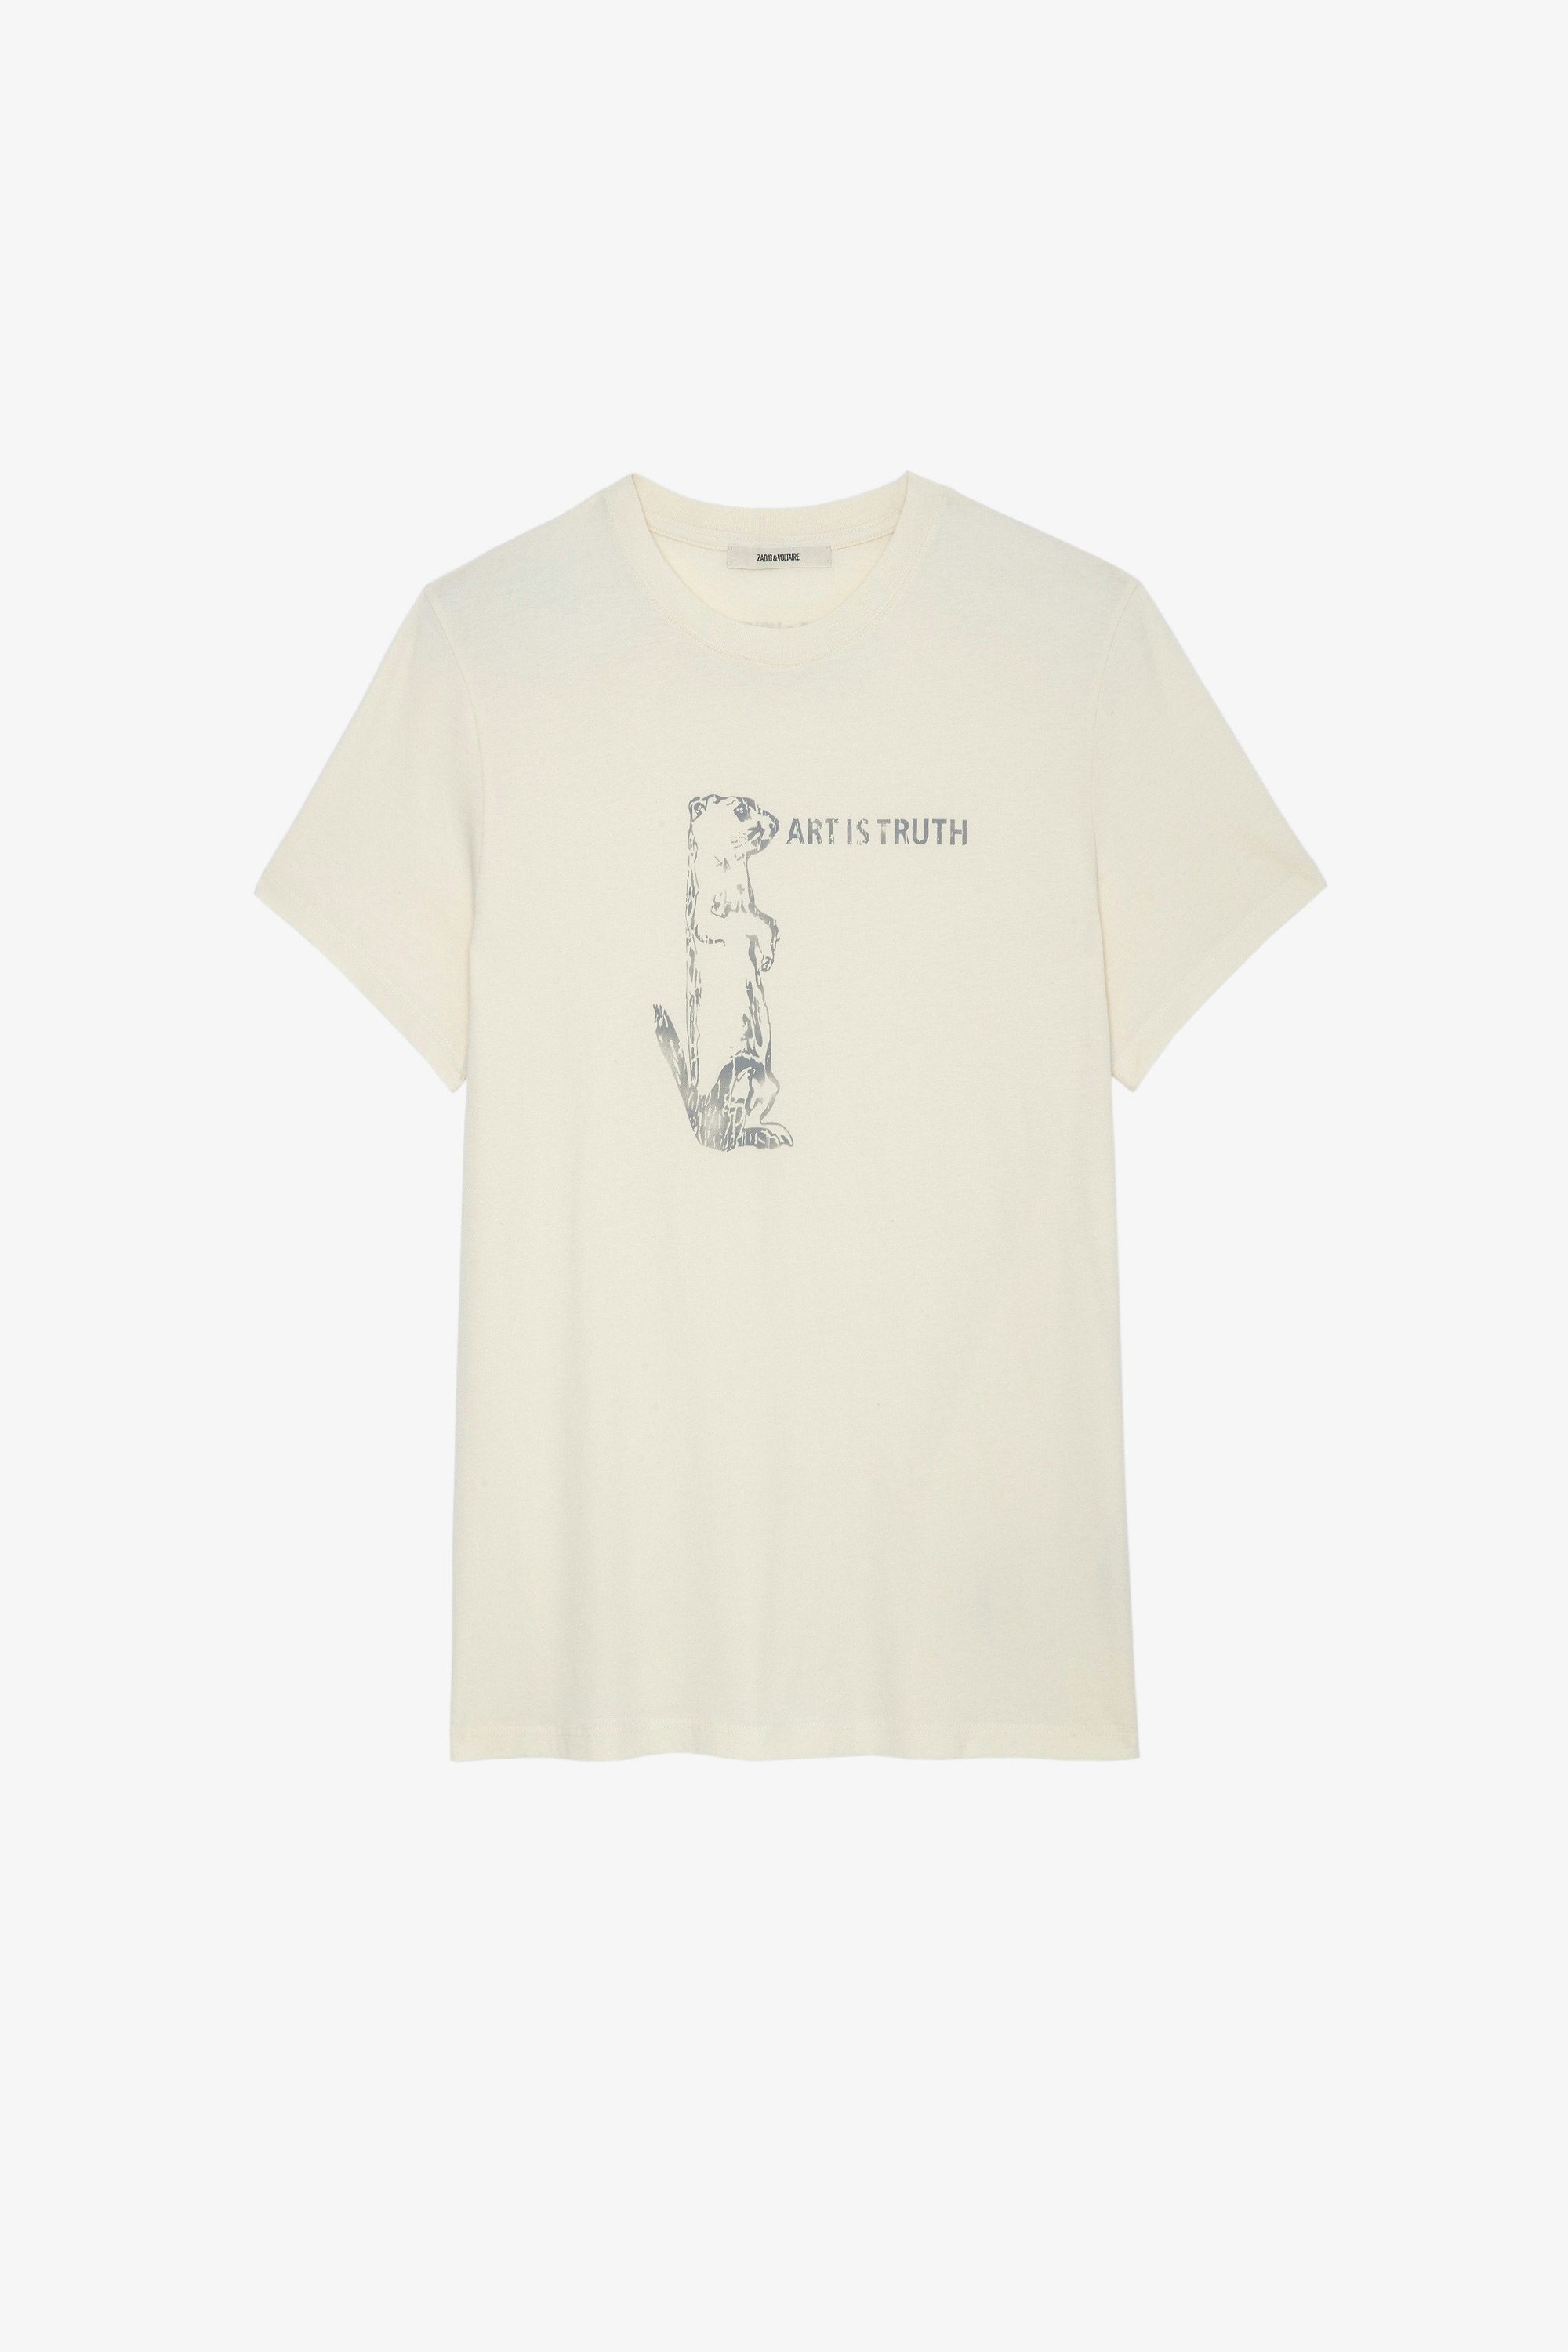 Marmot T-shirt Men’s ecru cotton marmot print T-shirt